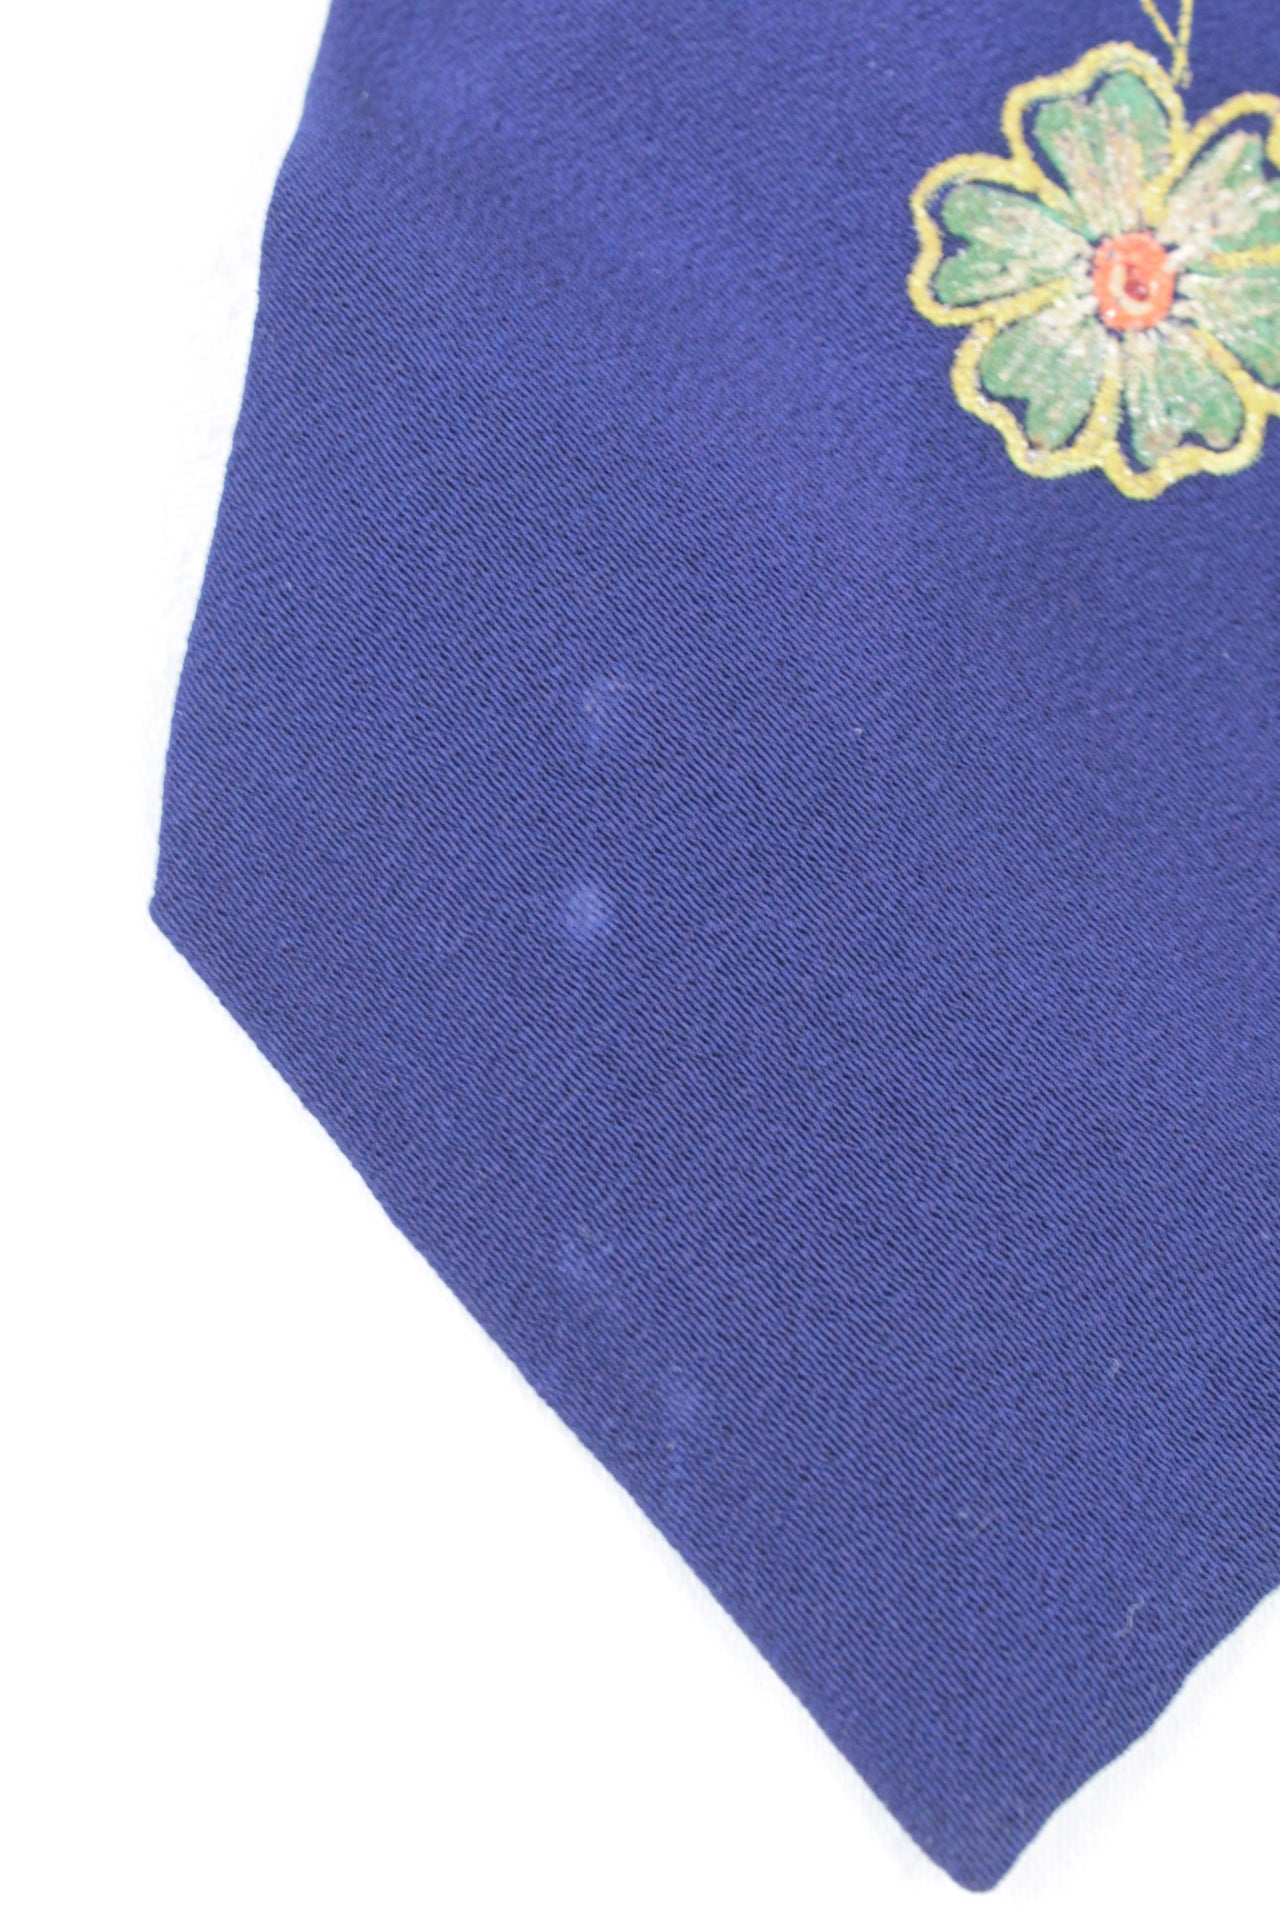 Vintage Hand Painted 1950s floral pattern blue swing tie